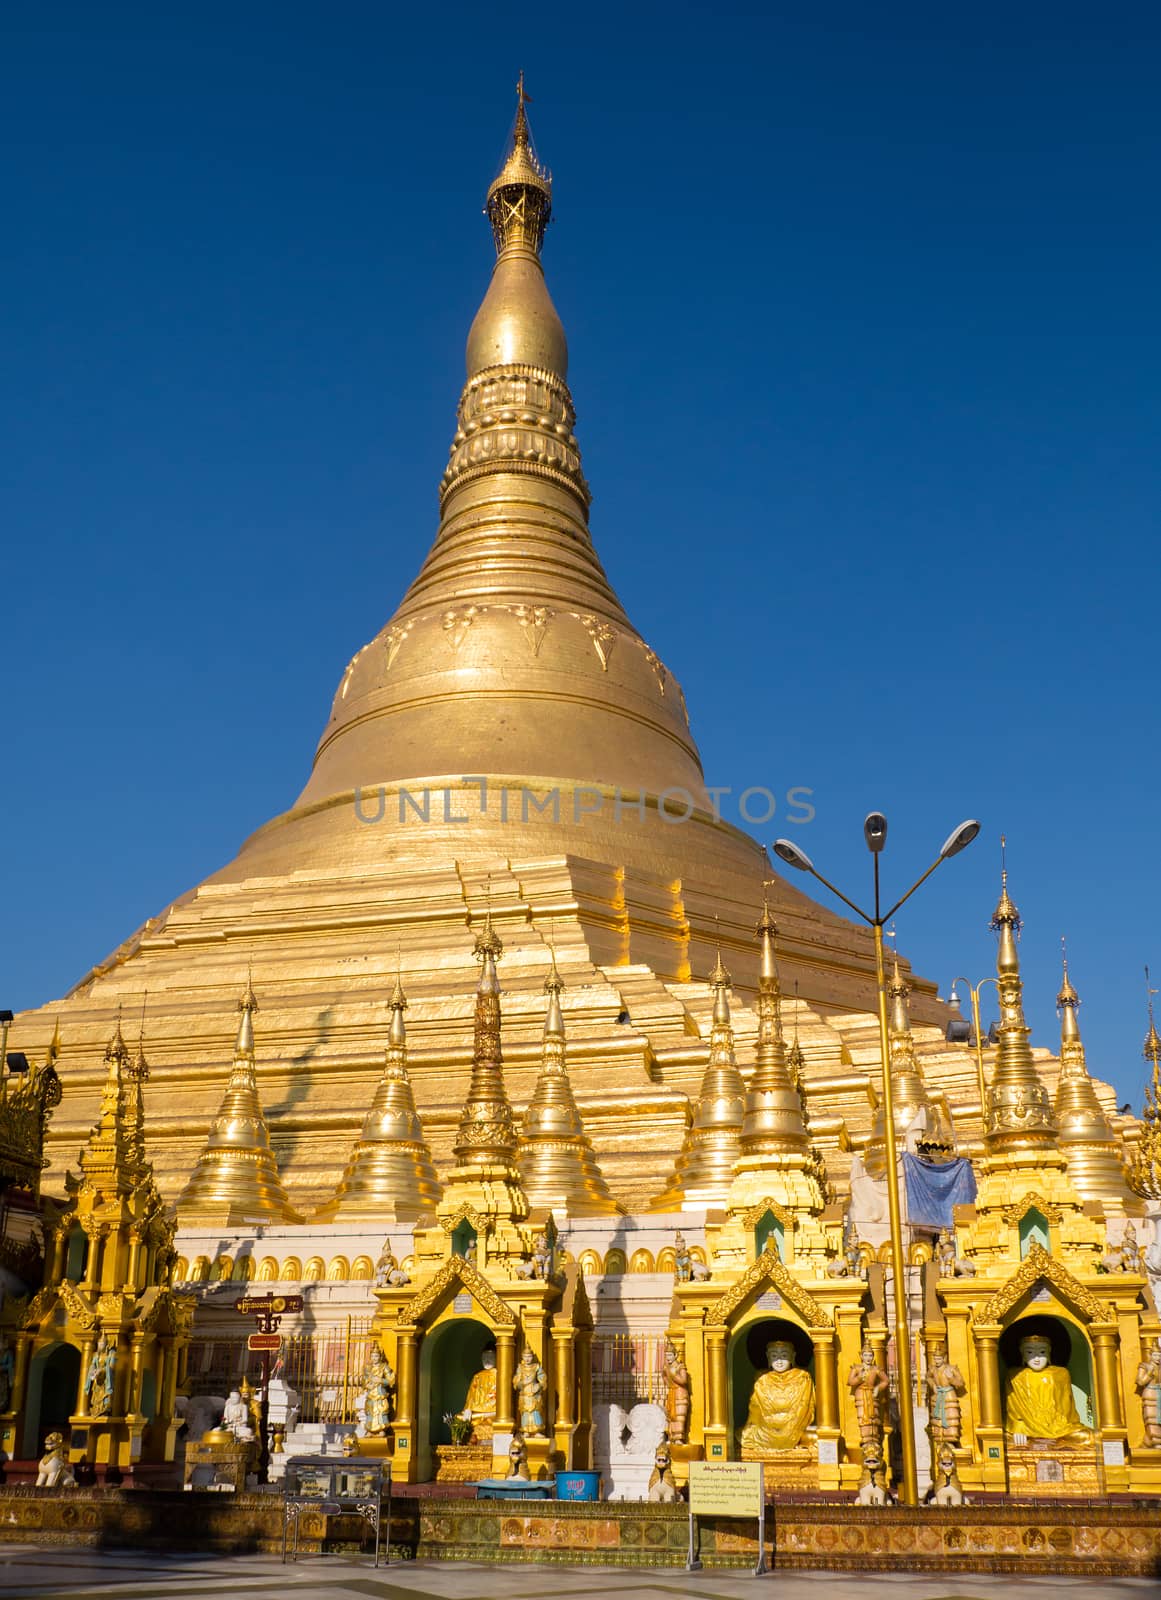 The Shwedagon Pagoda in Yangon, the capital of Republic of the Union of Myanmar.